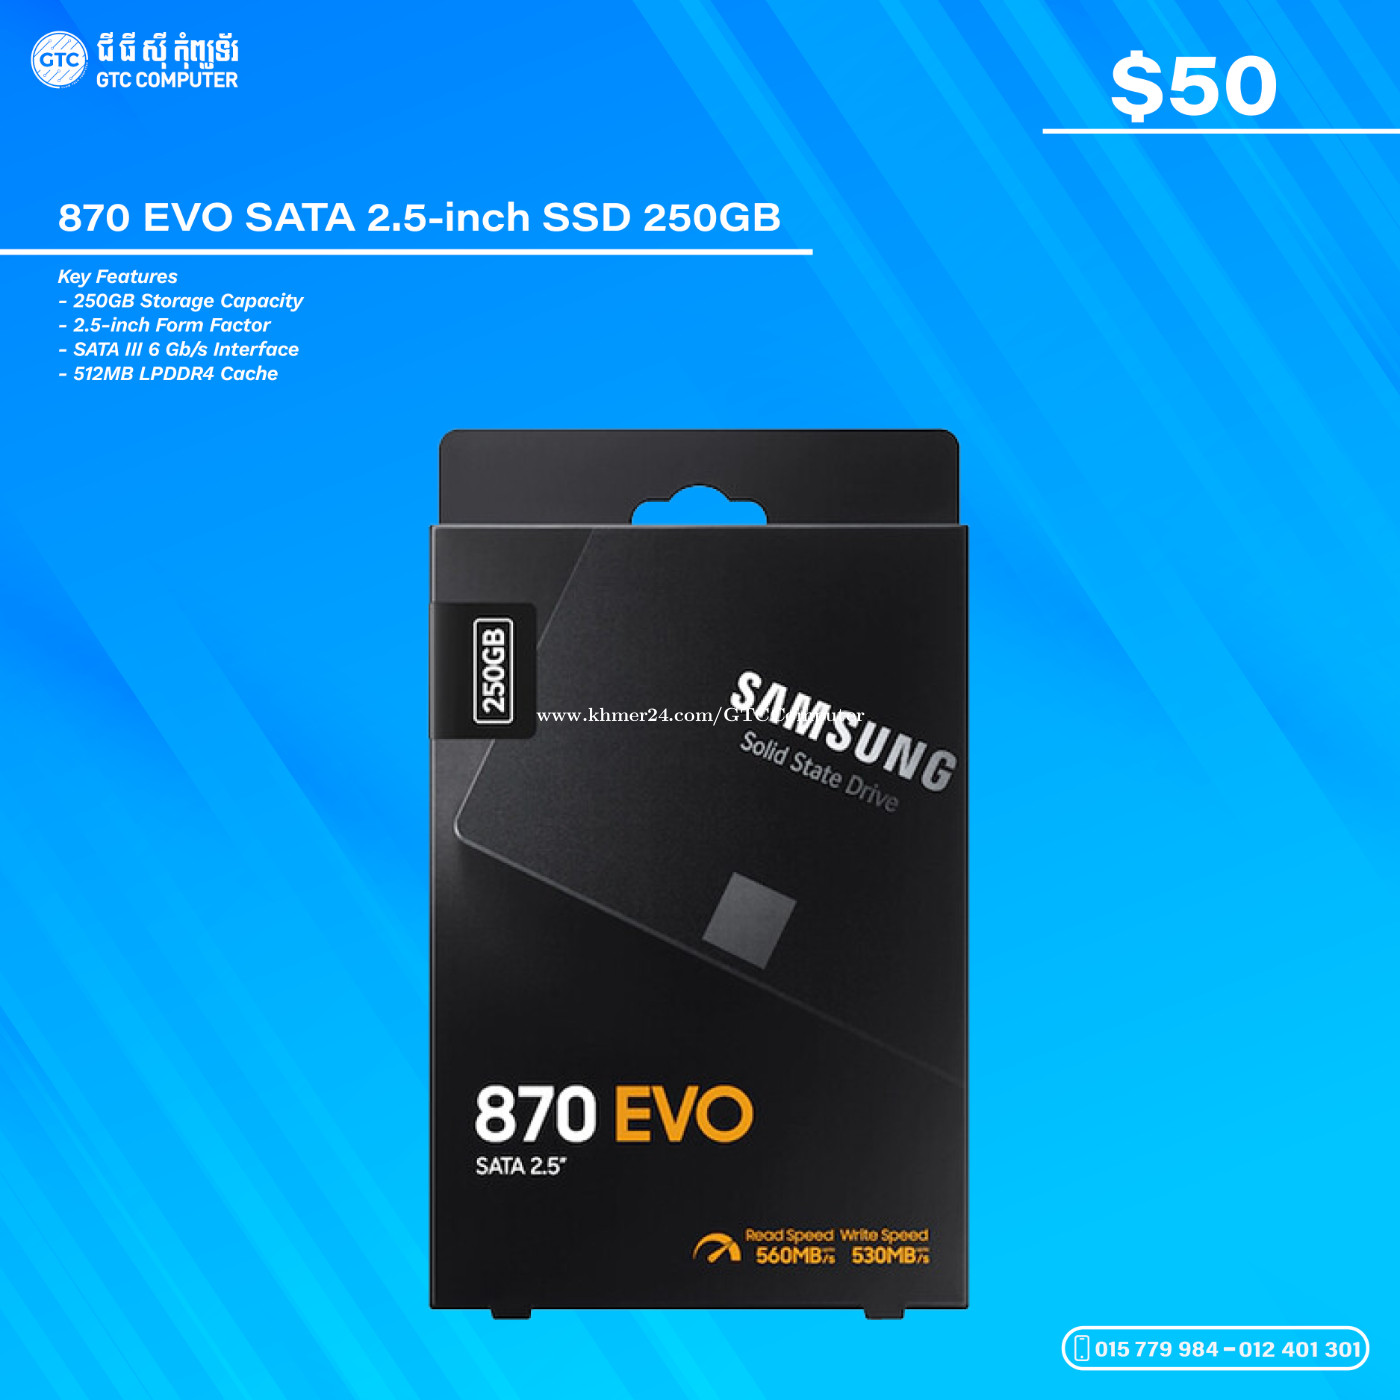 870 EVO SATA 2.5-inch SSD 250GB Price $50.00 in Veal Vong, Cambodia - GTC  Computer